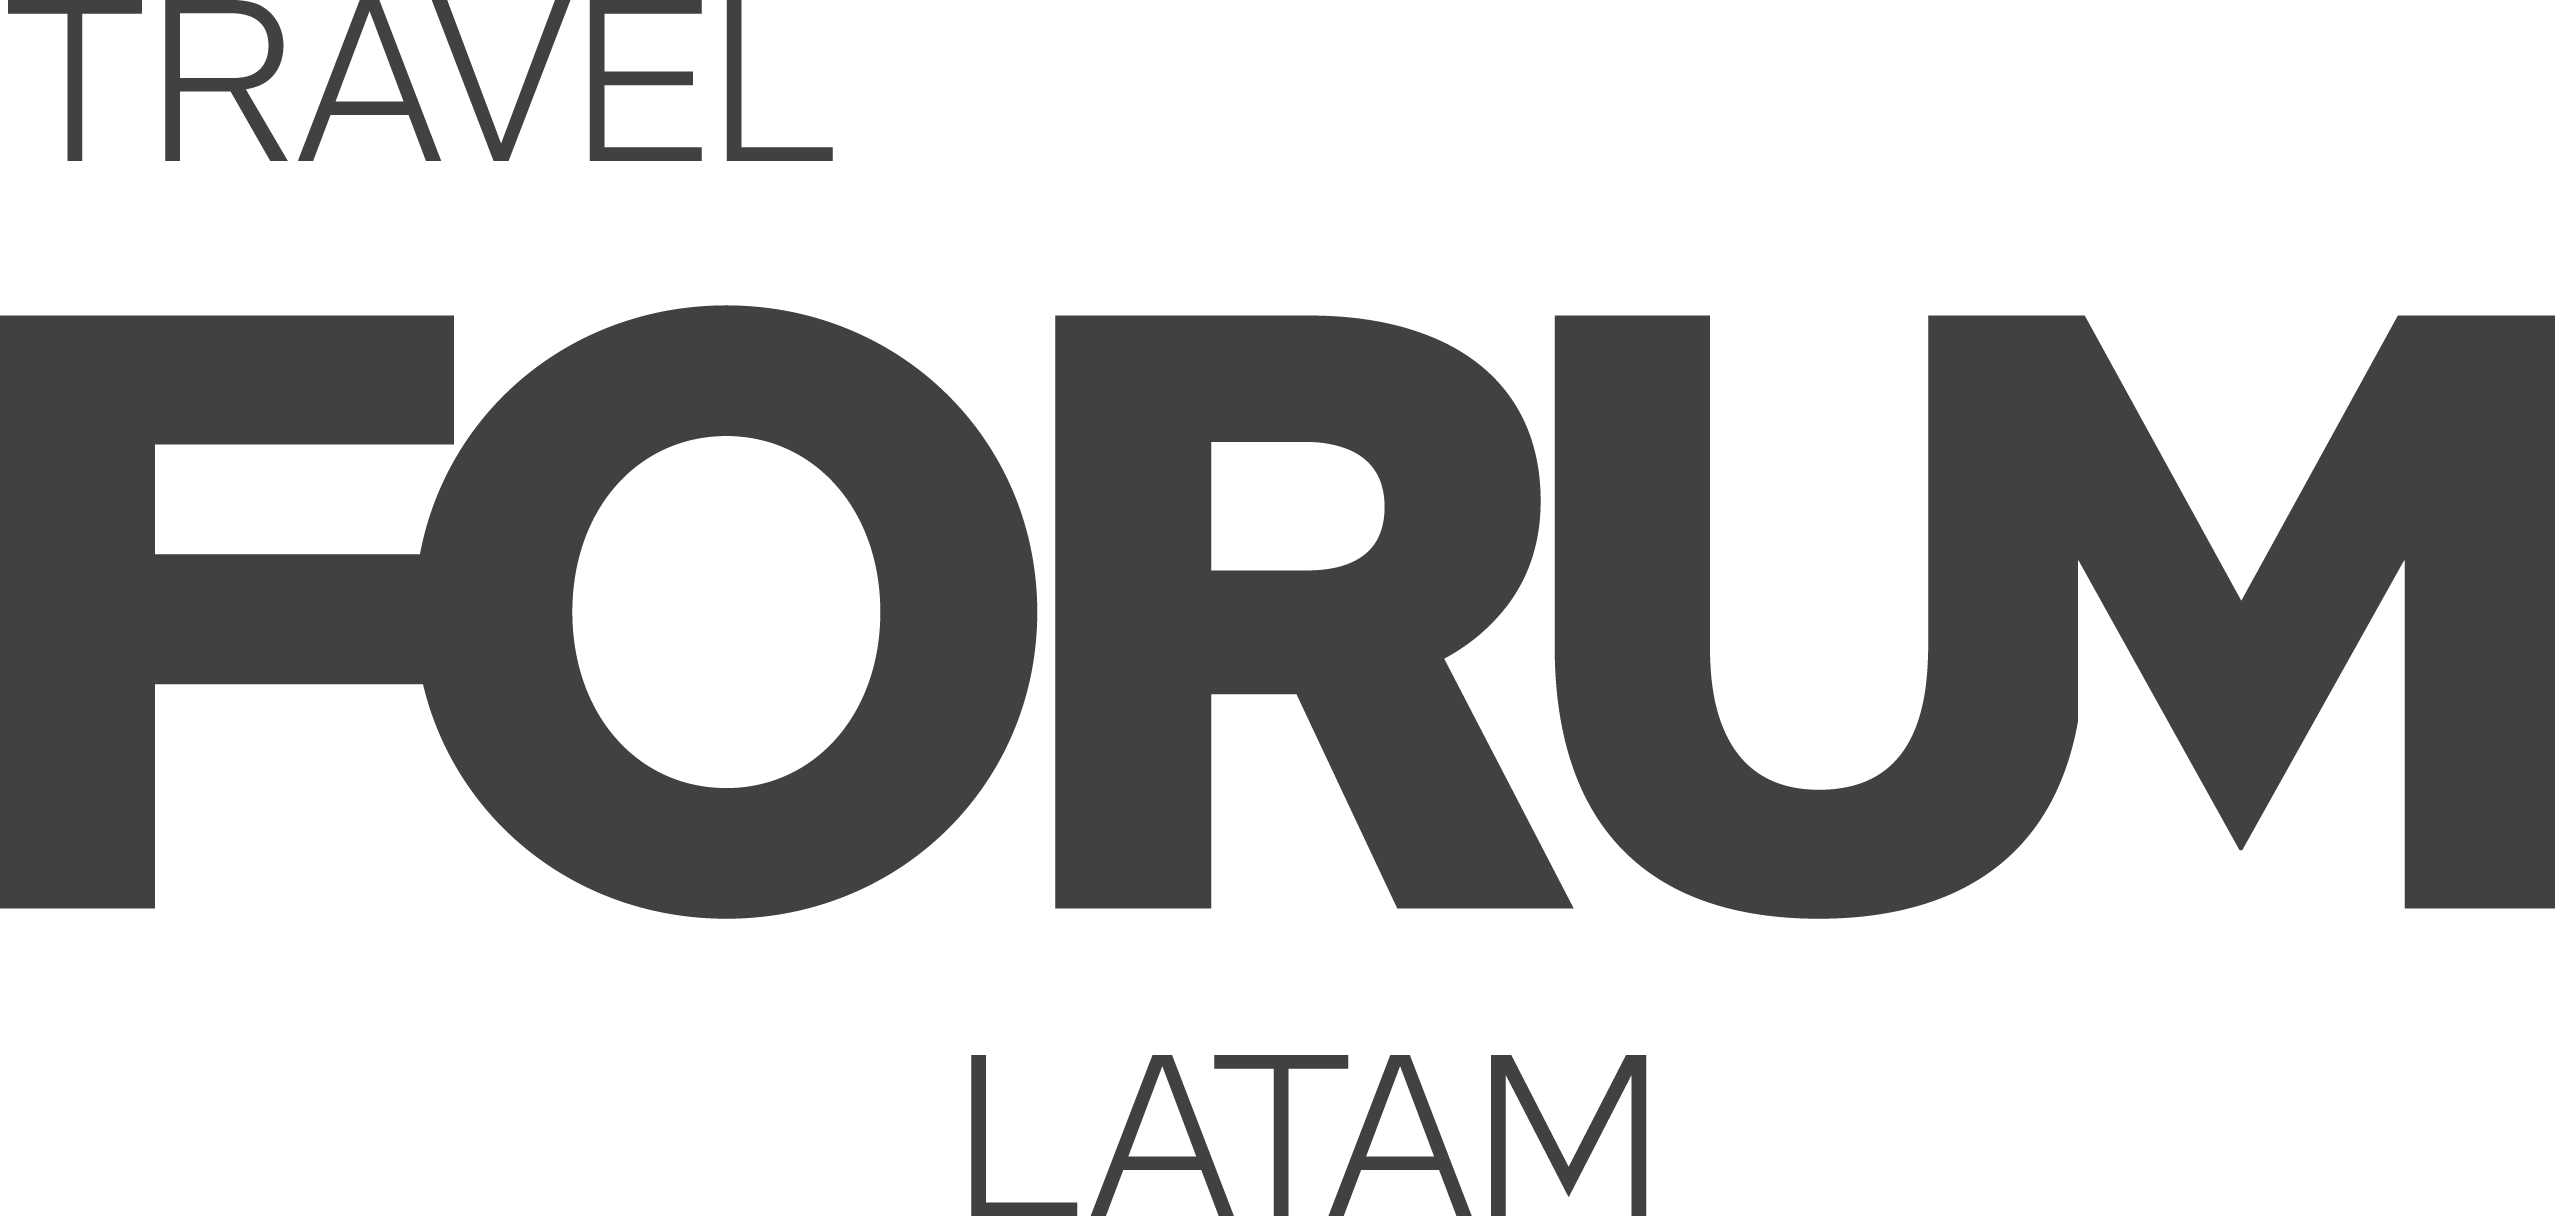 Travel Forum Latam logo